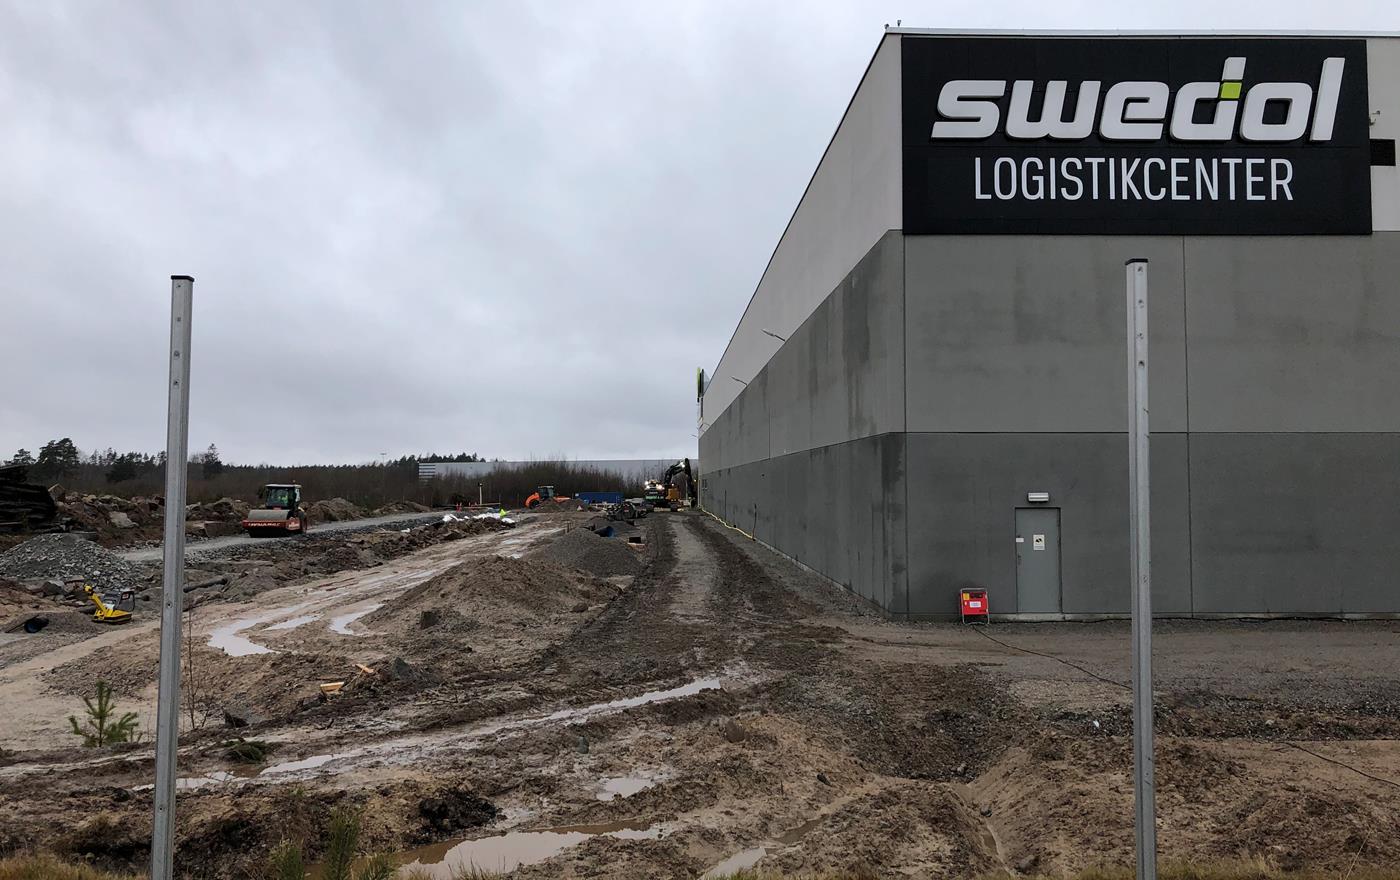 TB: Logistik ref Swedol Örebro